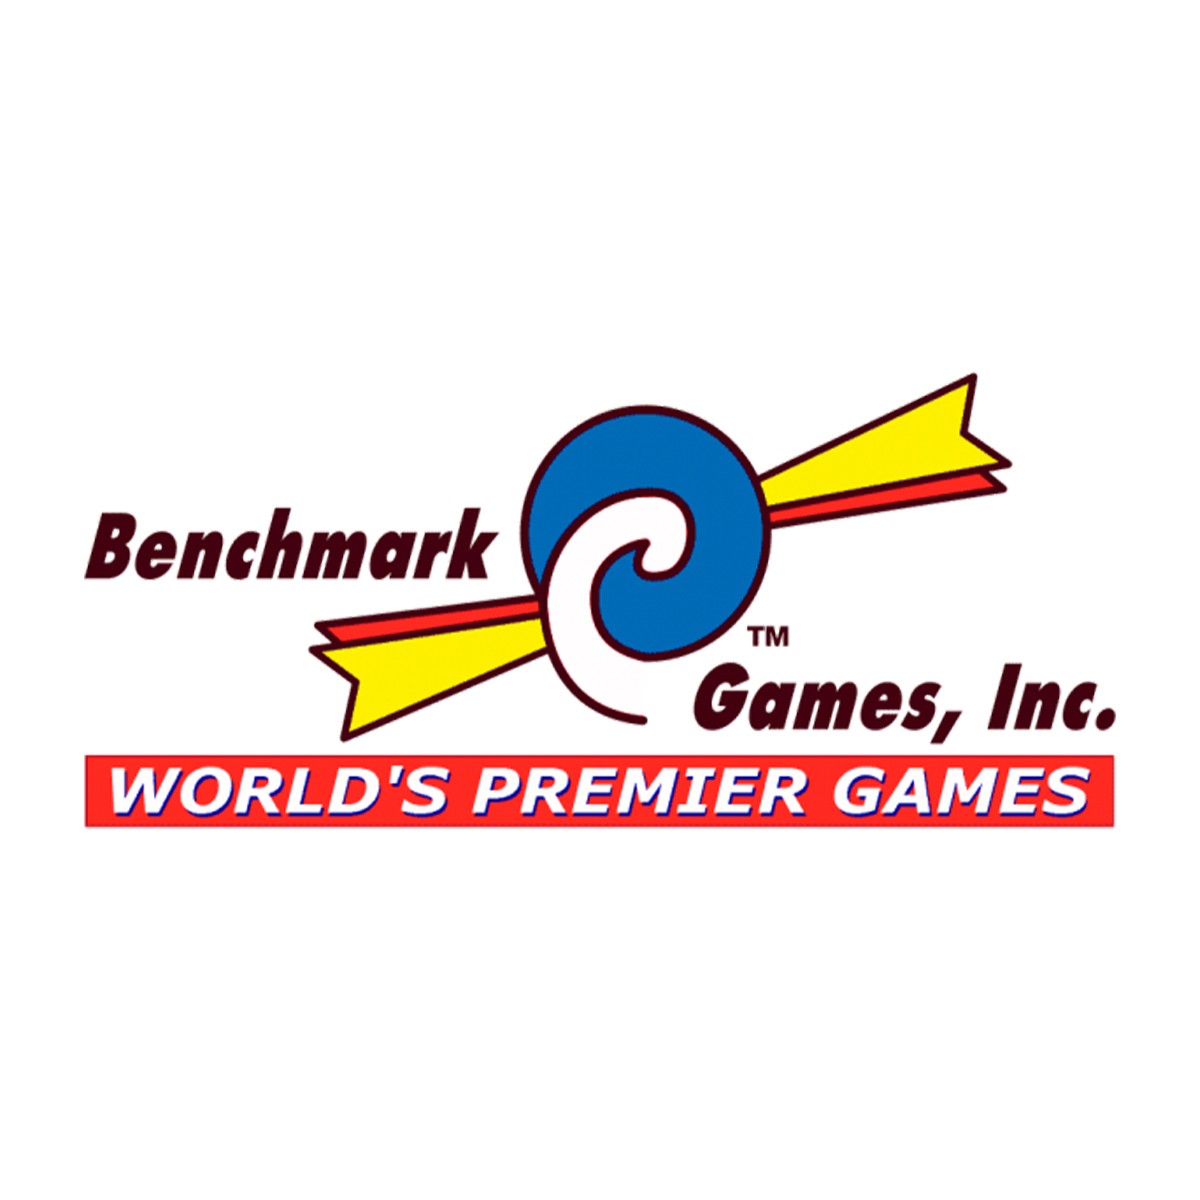 Benchmark Games, Inc.